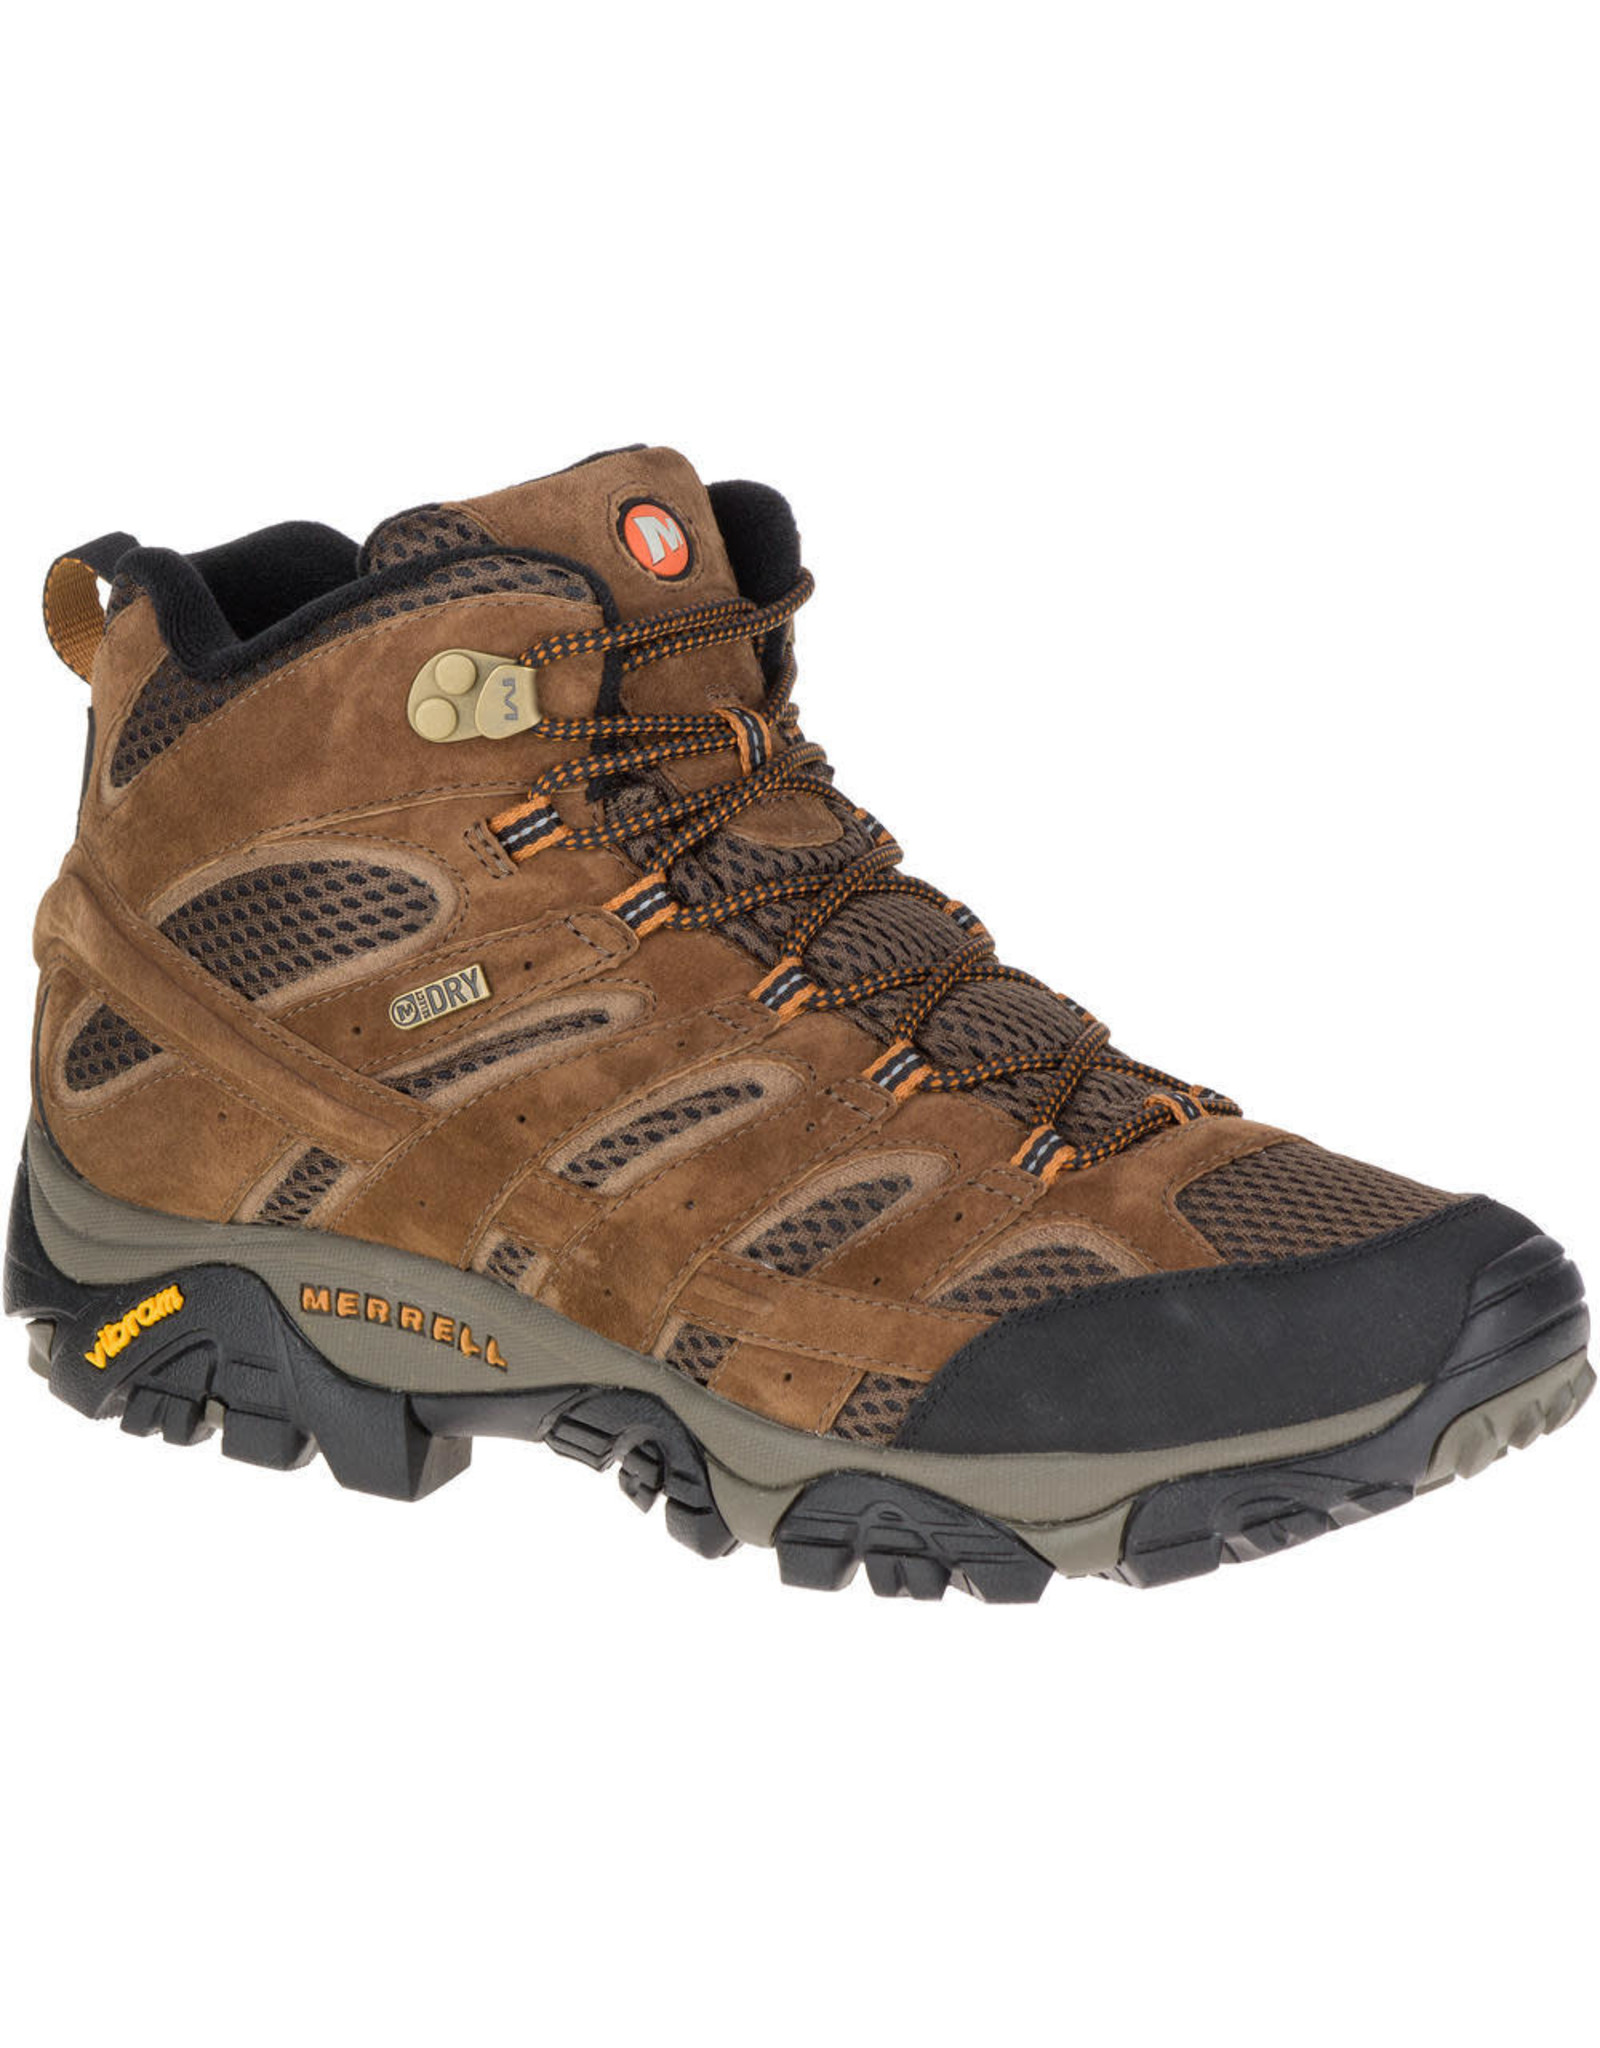 Merrell Men's Moab 2 J06051 Mid Waterproof Hiking Shoes